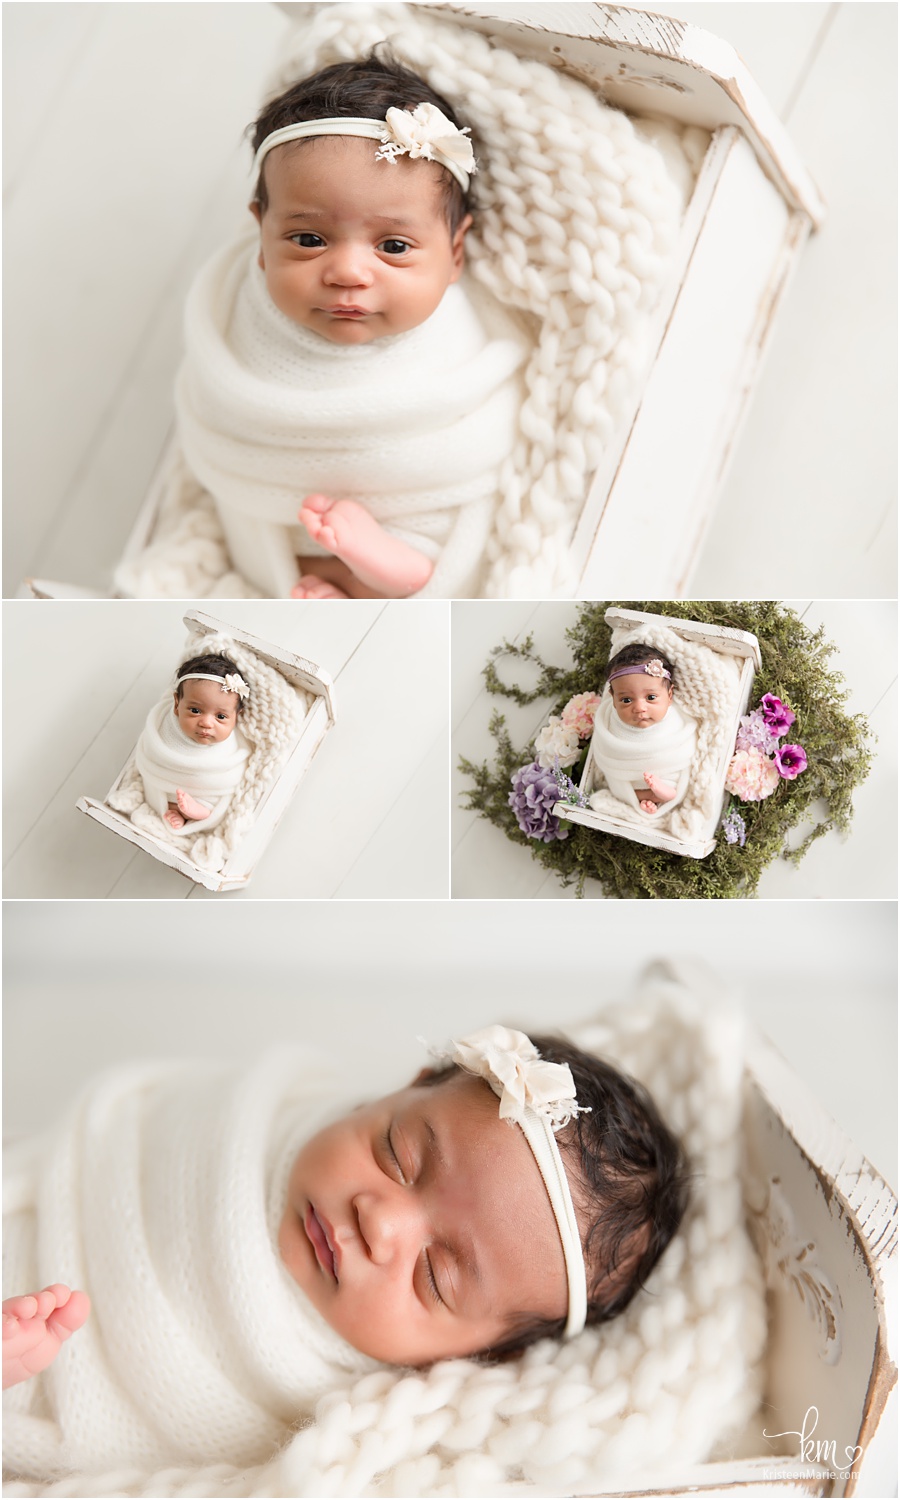 newborn girl - 1 month old in white